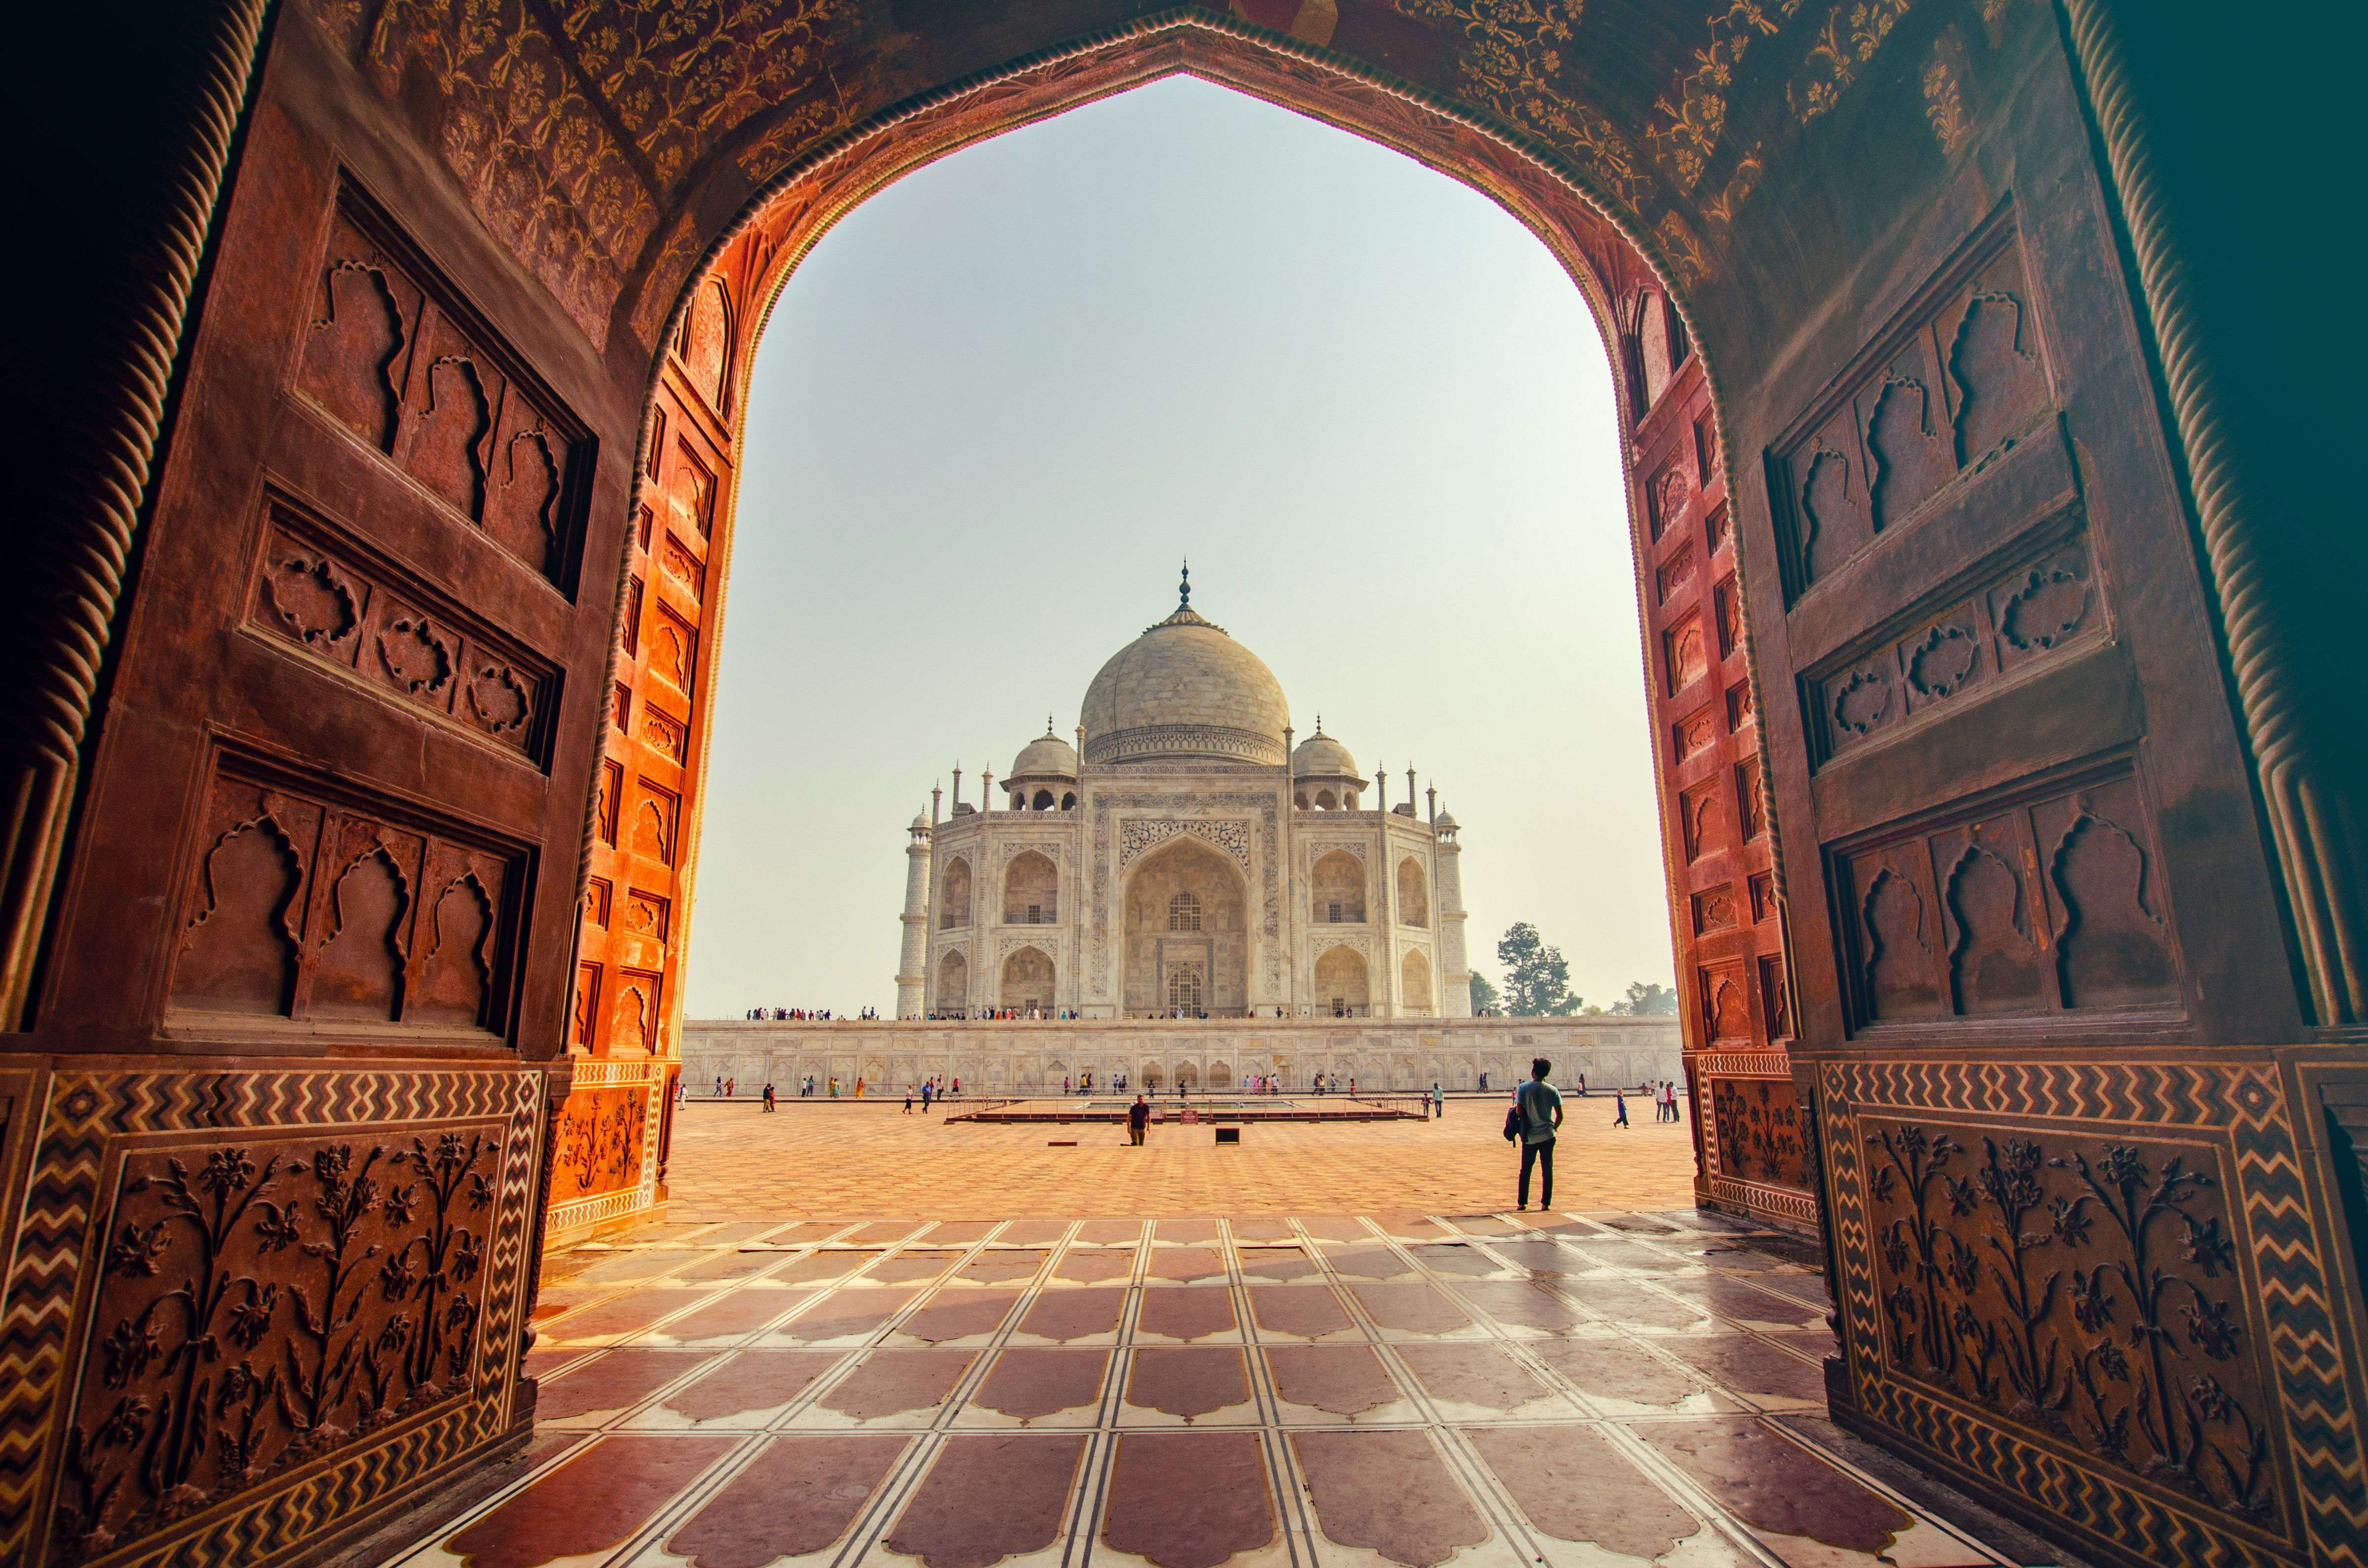 Entrance to the Taj Mahal with man in walkway